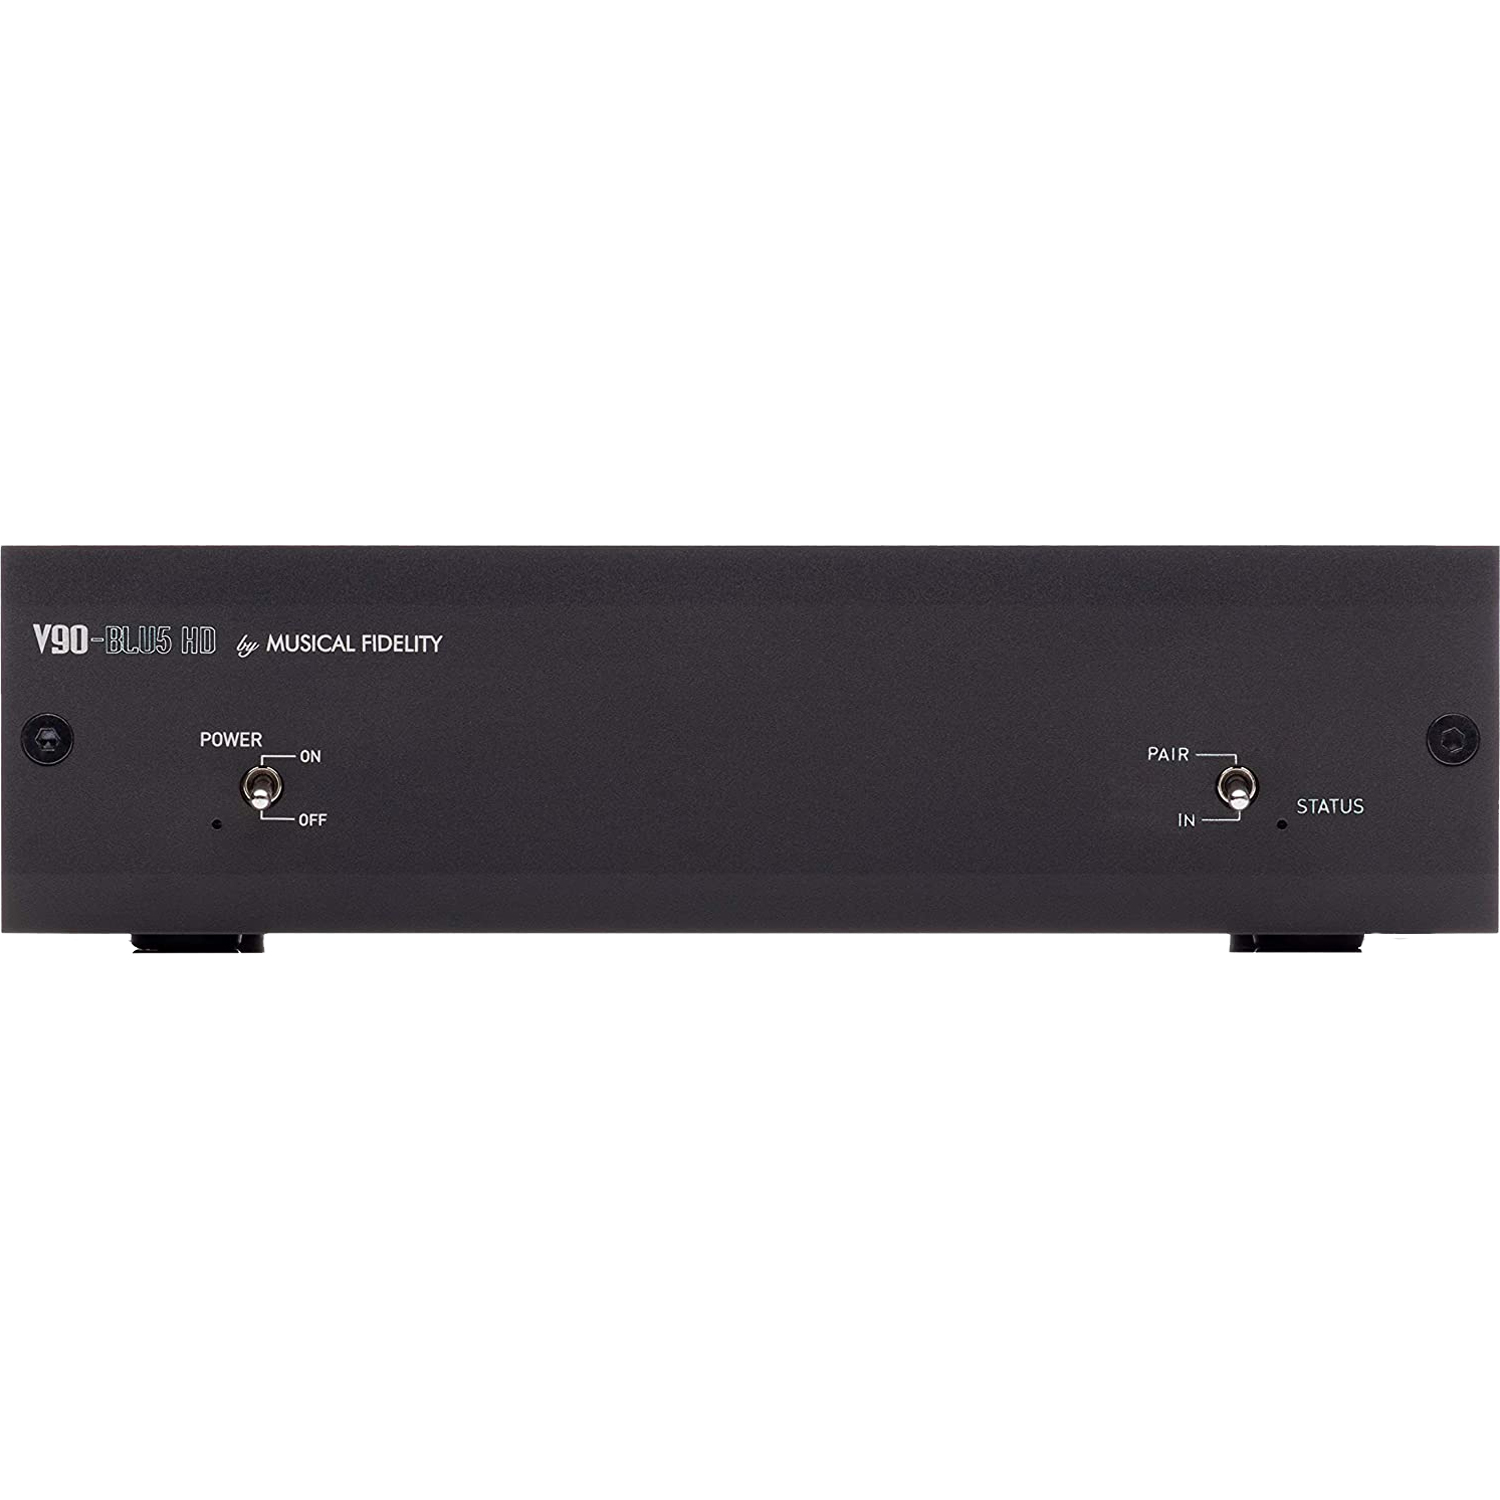 MUSICAL FIDELITY V90-BLU5 HD Bluetooth Receiver Black